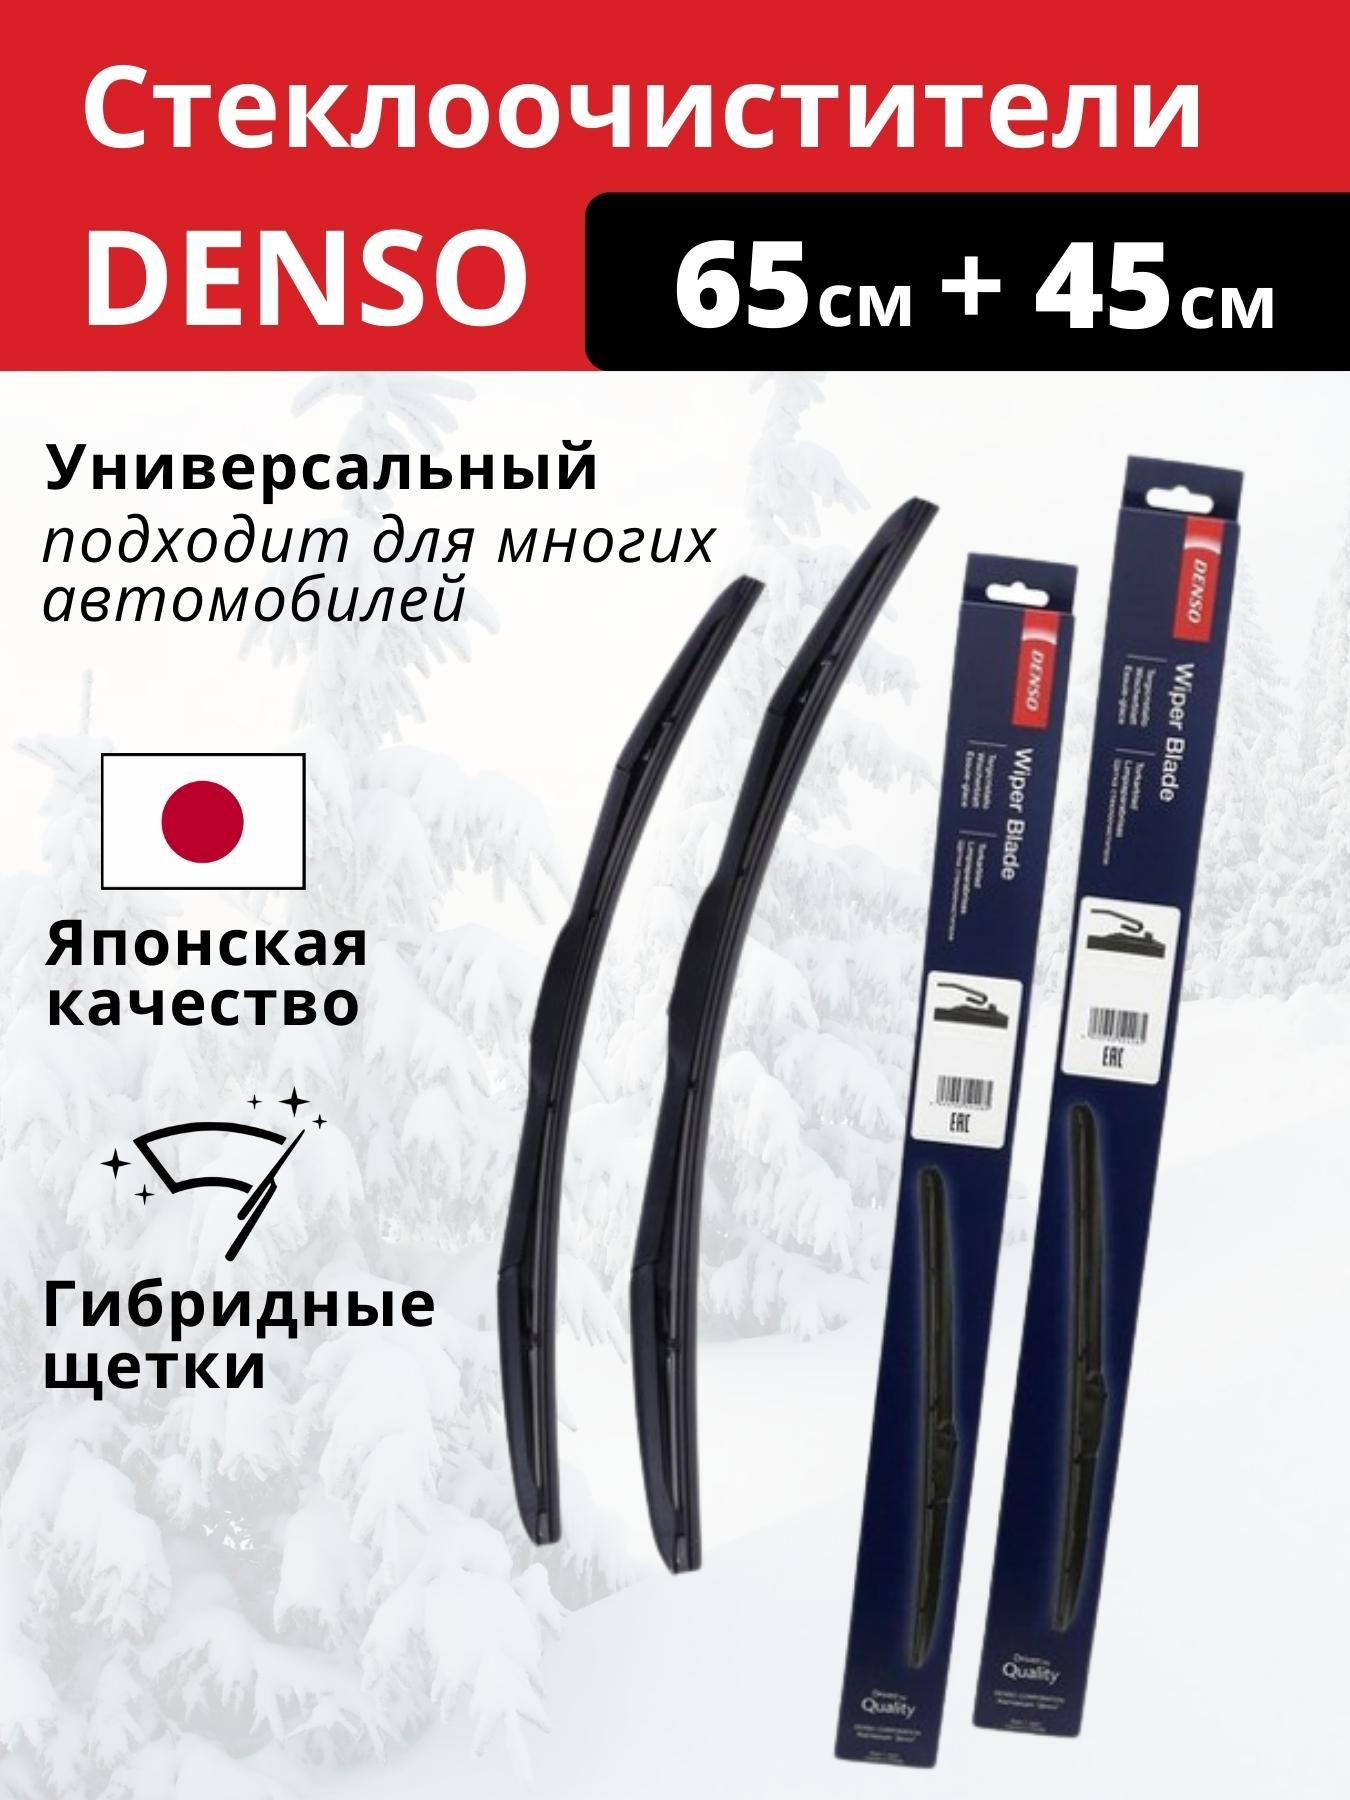 Denso 650. Резинка для гибридной щётки стеклоочистителя Denso 650 мм. Комплект щеток Денсо Hybrid 650 450. Резинка стеклоочистителя 650 мм Denso. Щетка Denso 650.